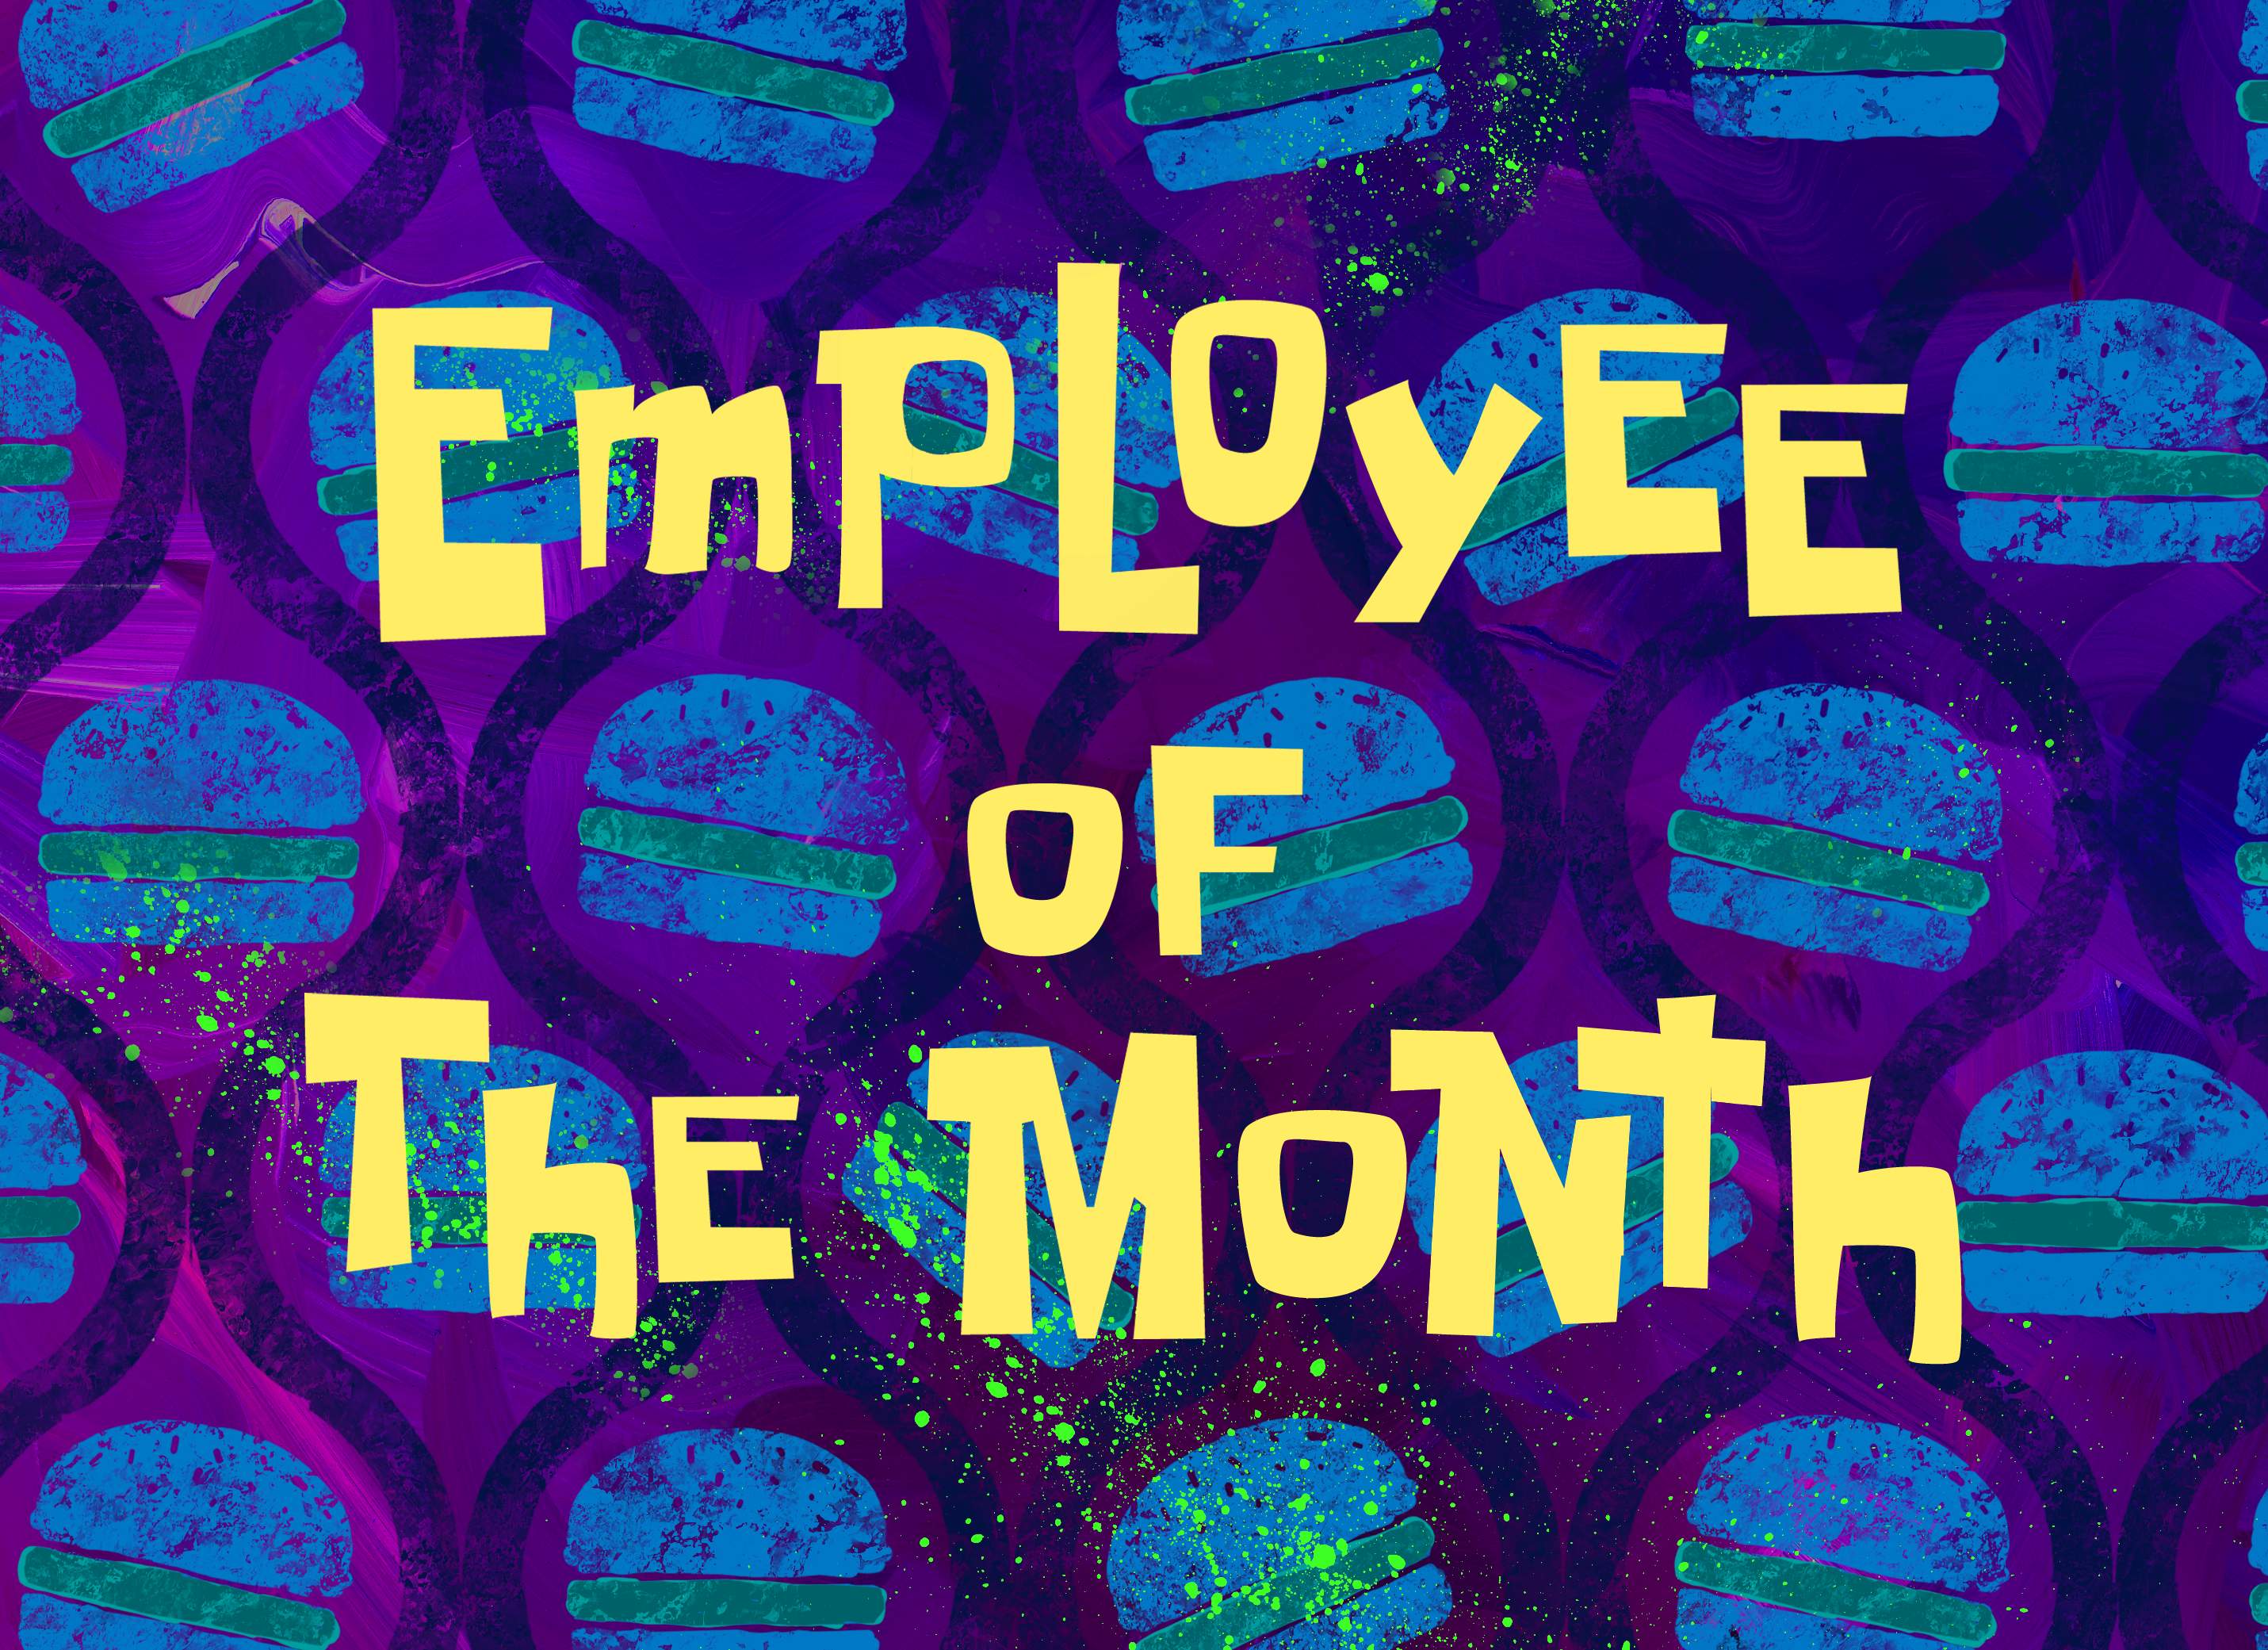 spongebob squarepants employee of the month game exe